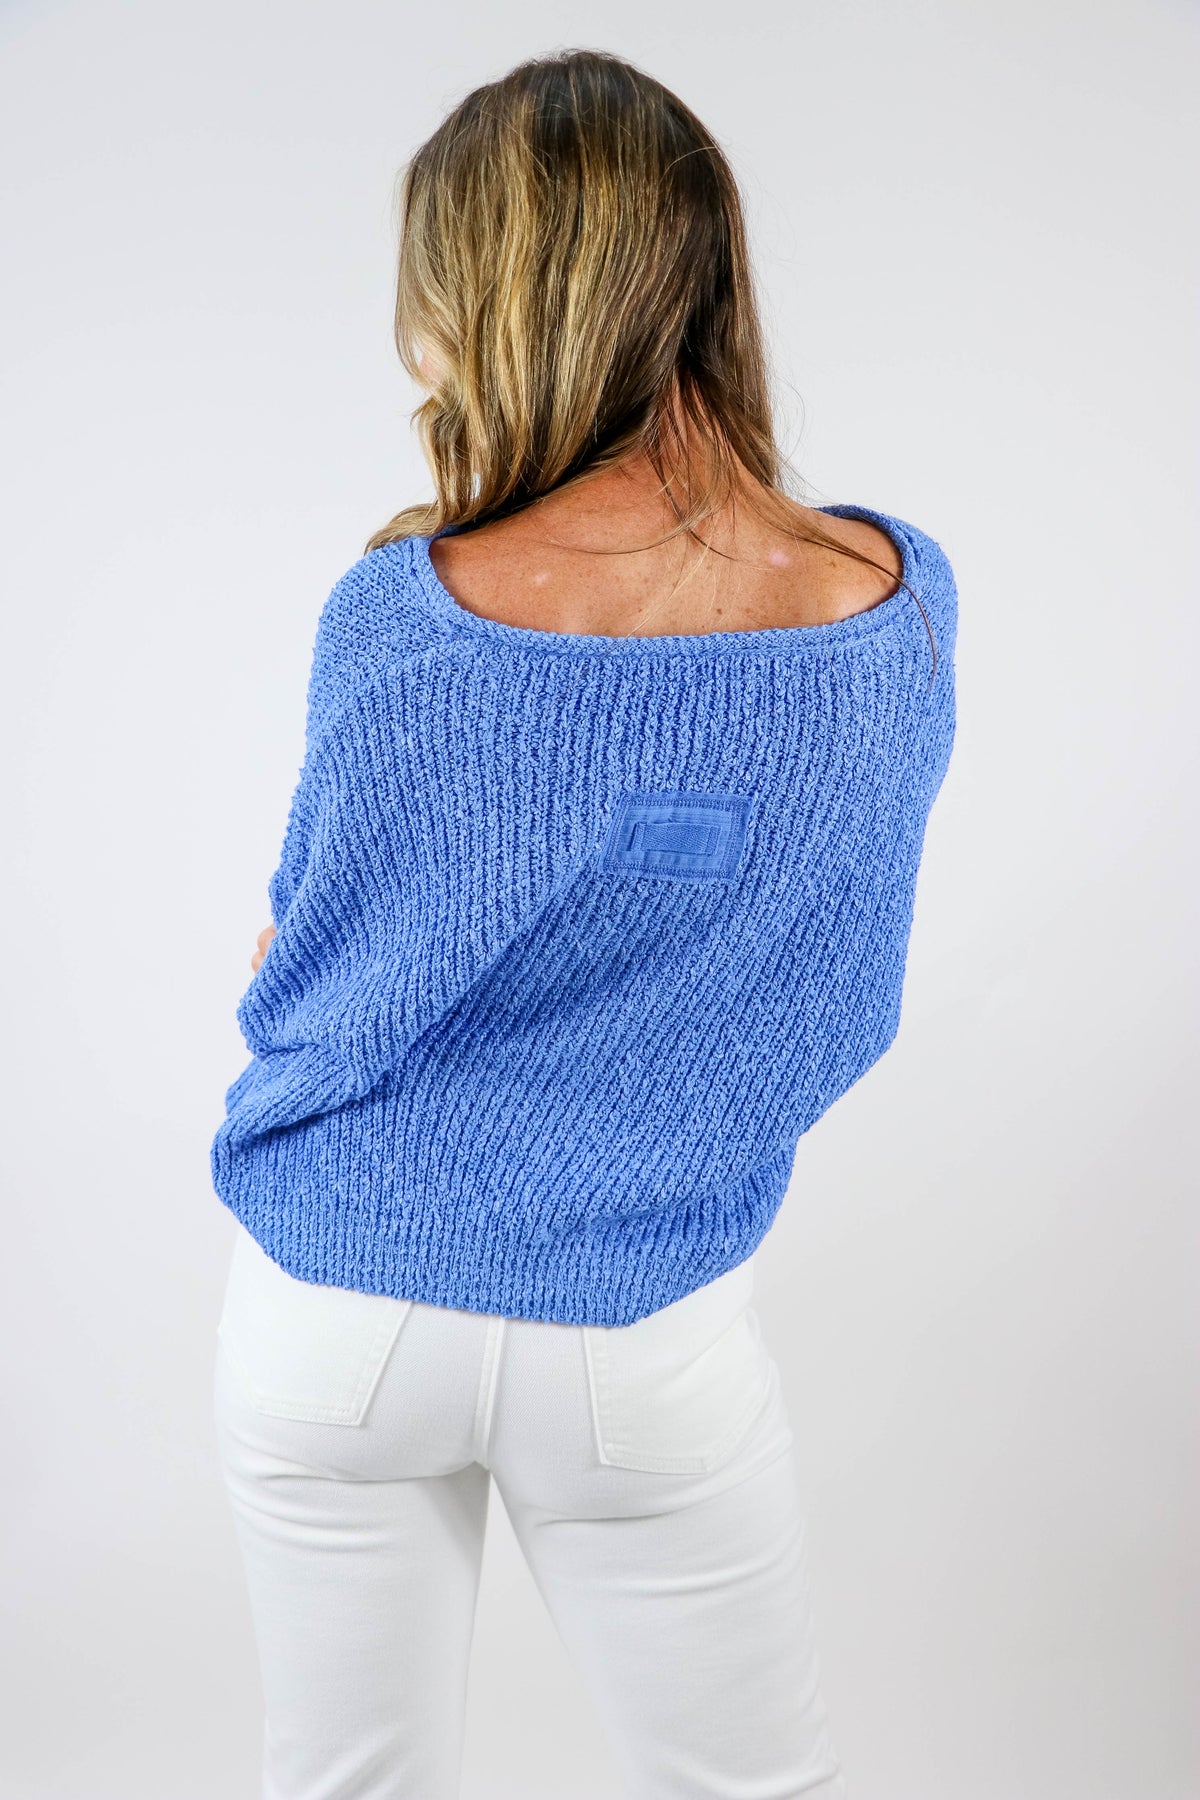 Illa Illa | Cropped V-Neck Sweater | Sweetest Stitch Online Boutique